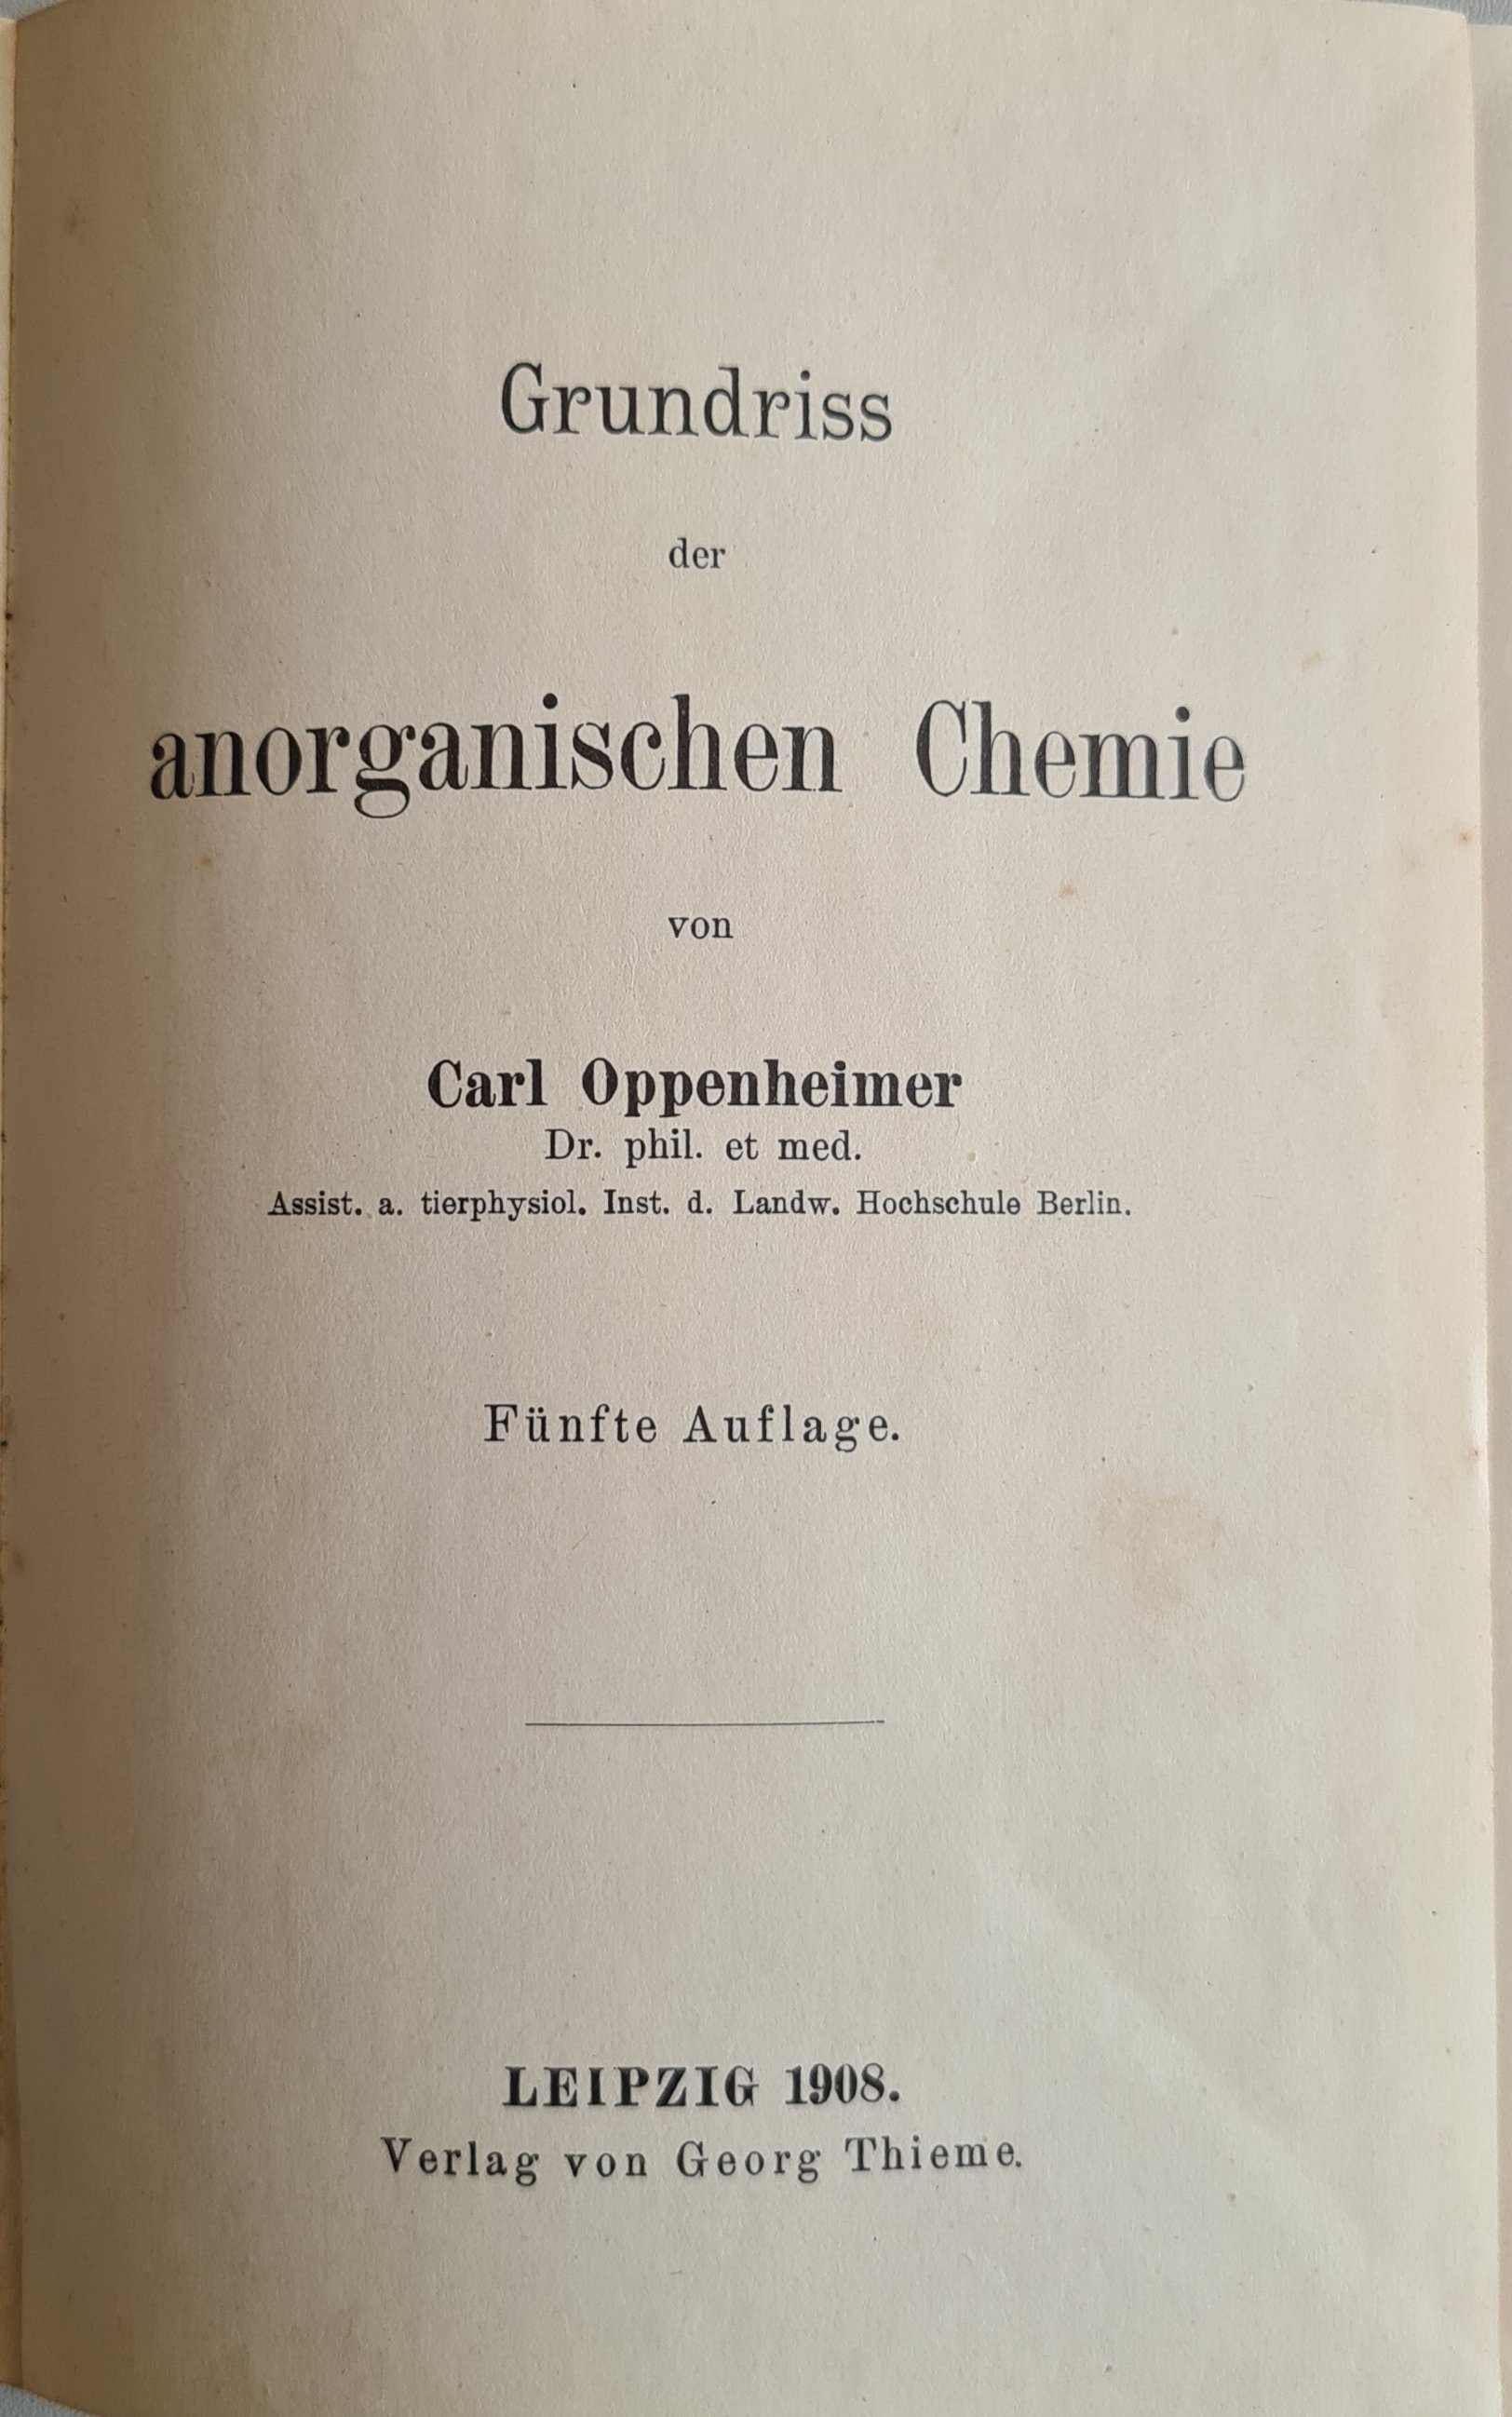 Grundriss der anorganischen Chemie (Krankenhausmuseum Bielefeld e.V. CC BY-NC-SA)